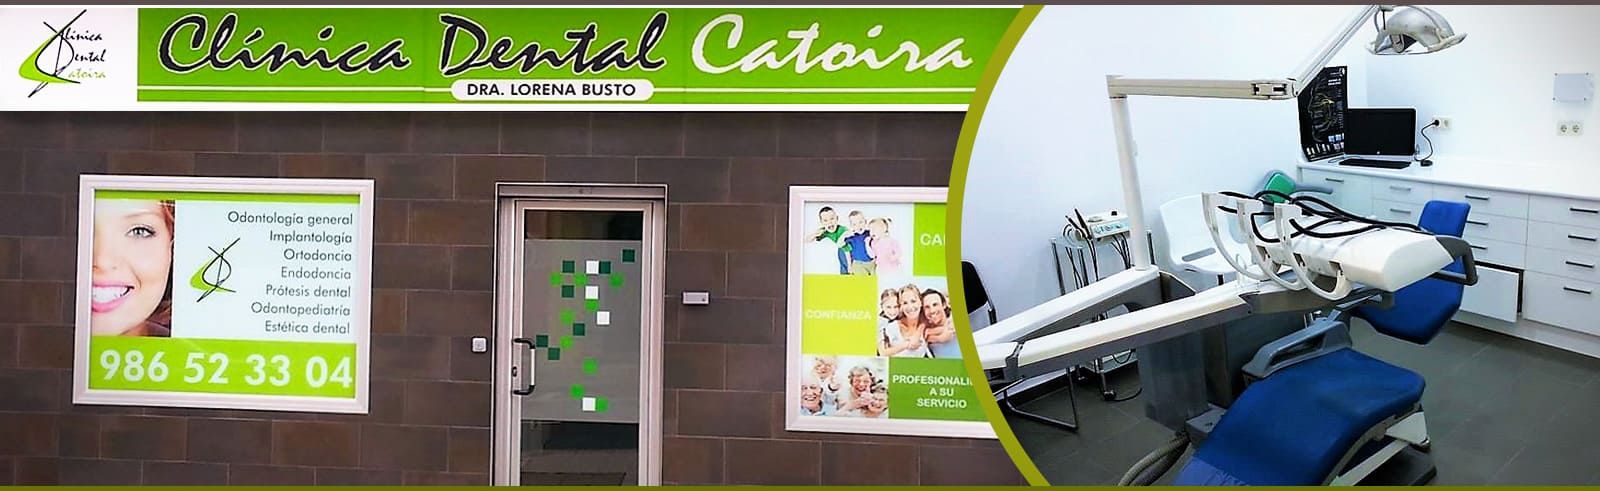 Clínica Dental Catoira Dra. Lorena Busto banner 2